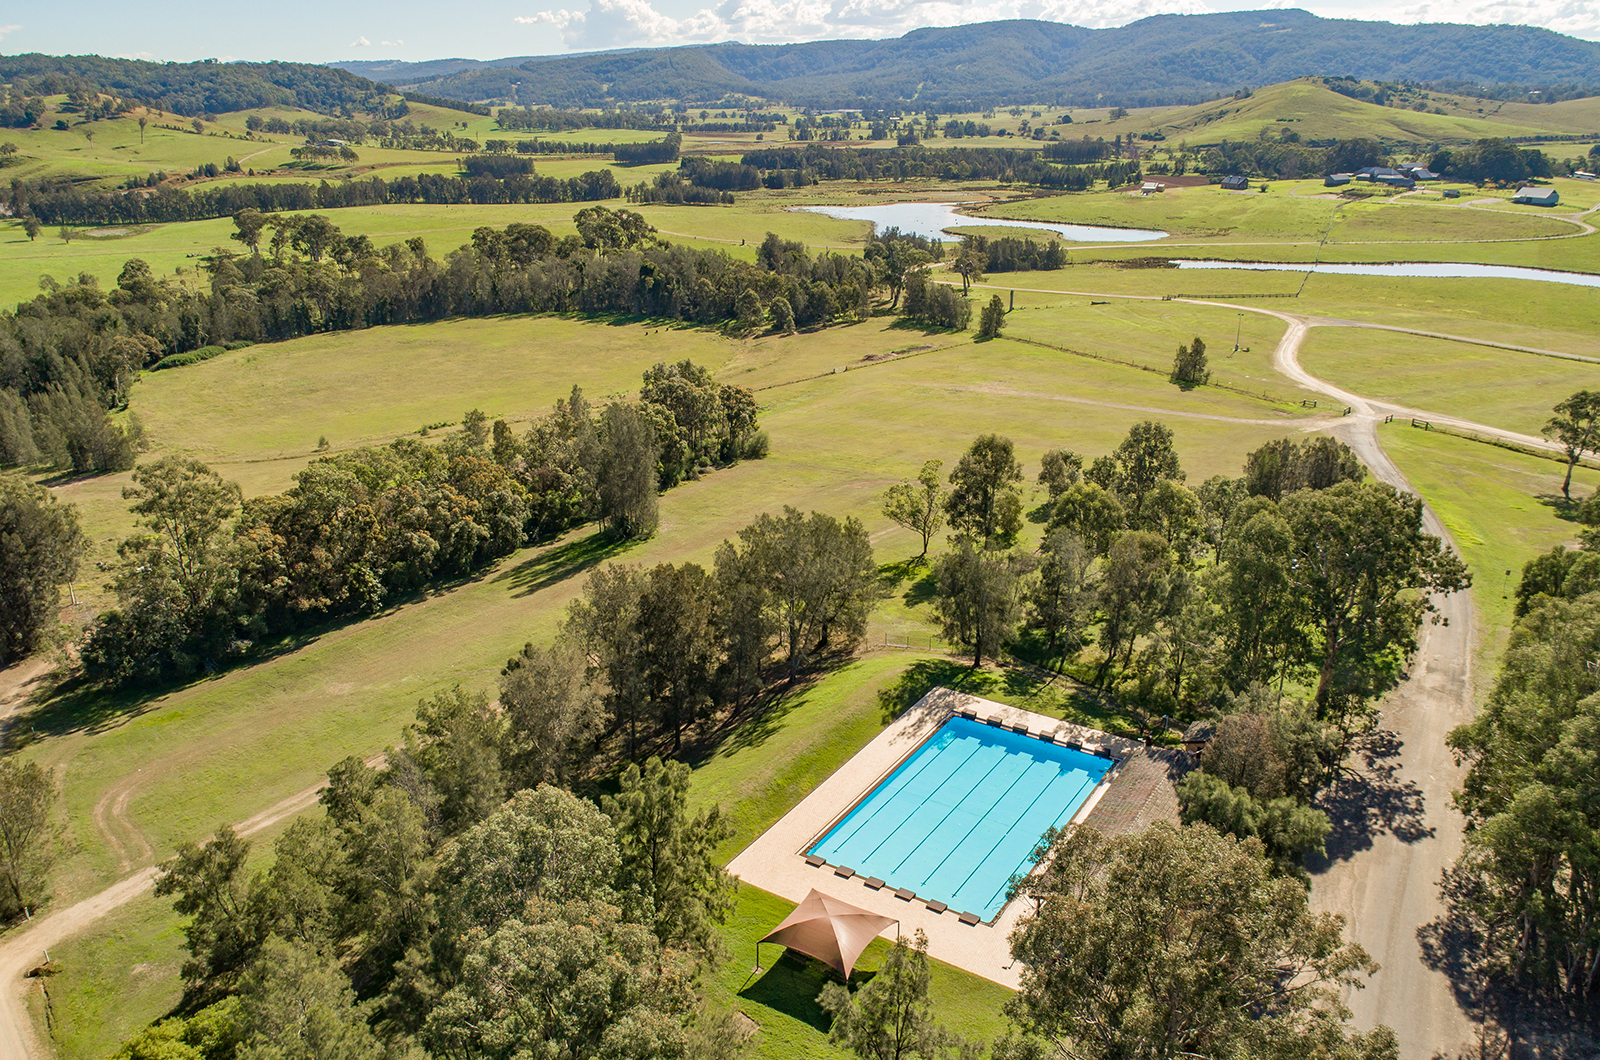 Pool in the rural landscape